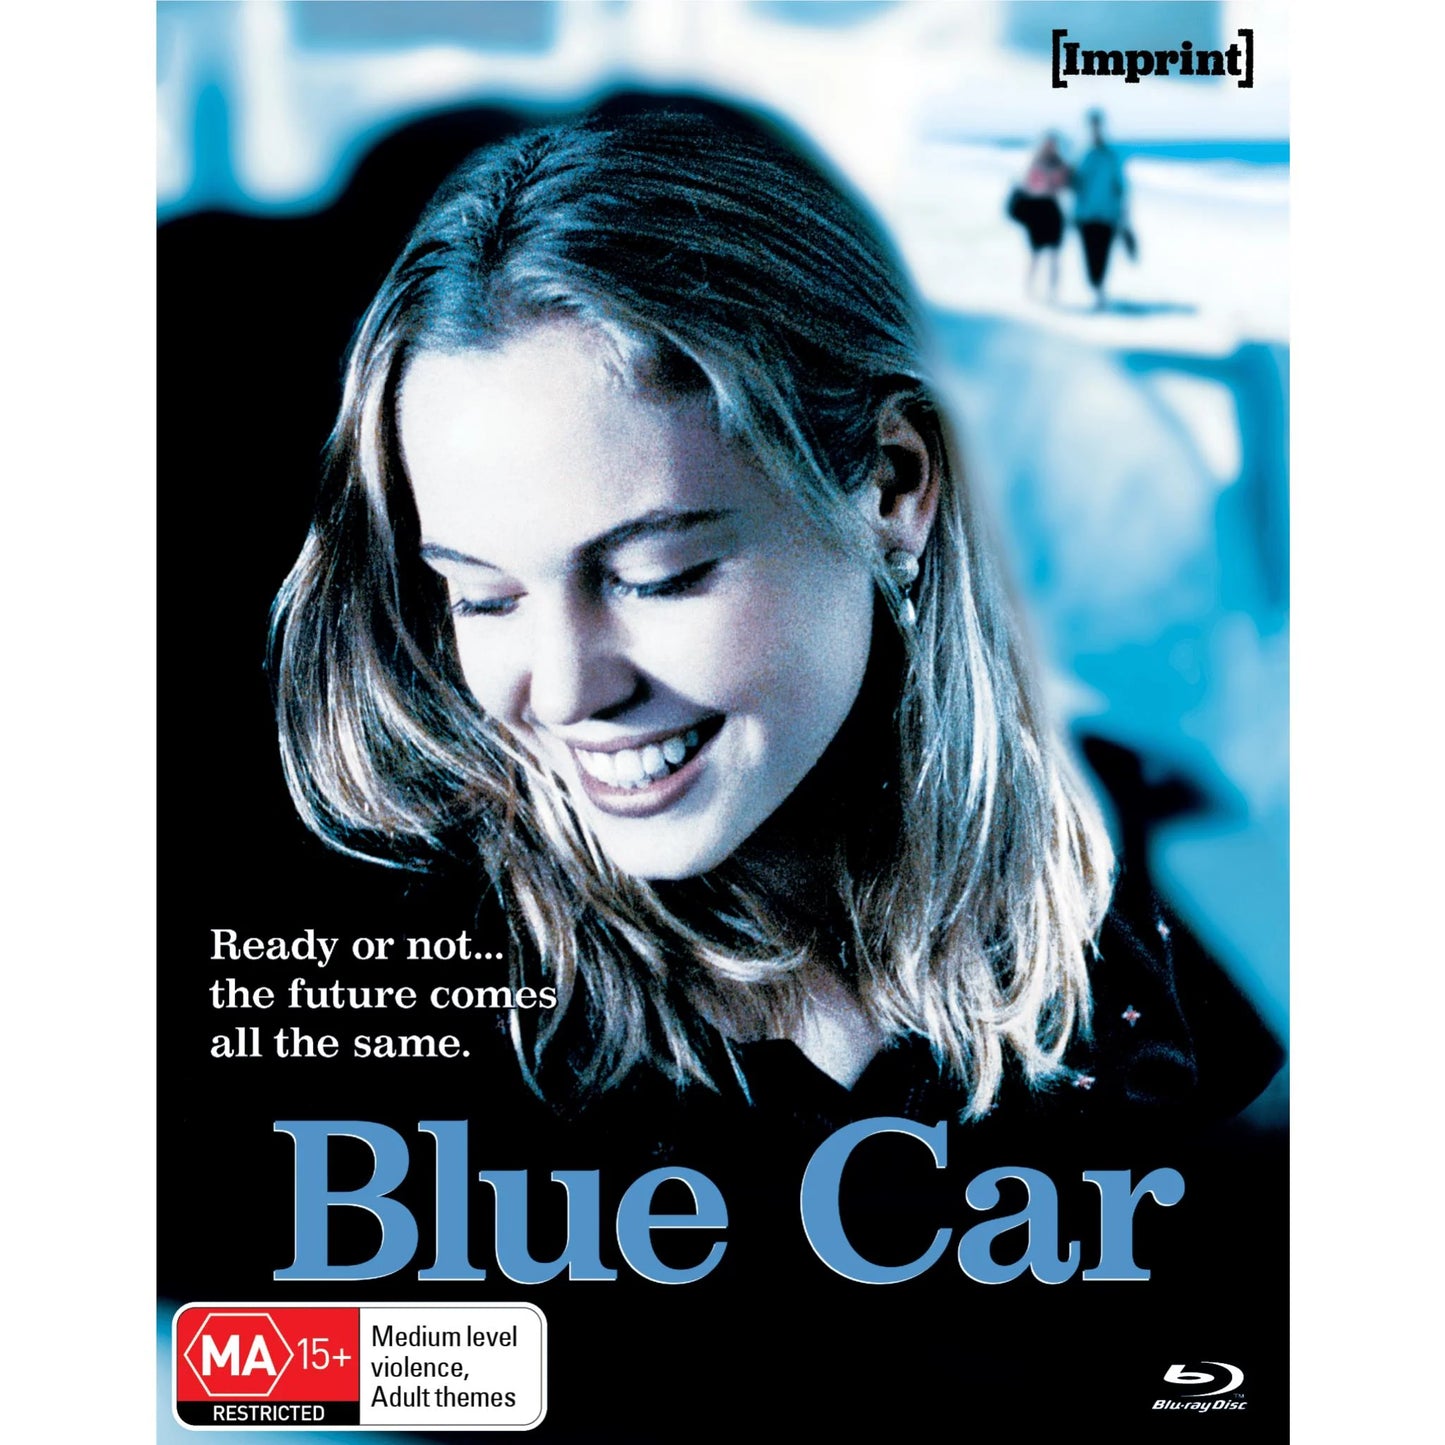 Blue Car (Imprint #248 Special Edition) Blu-Ray